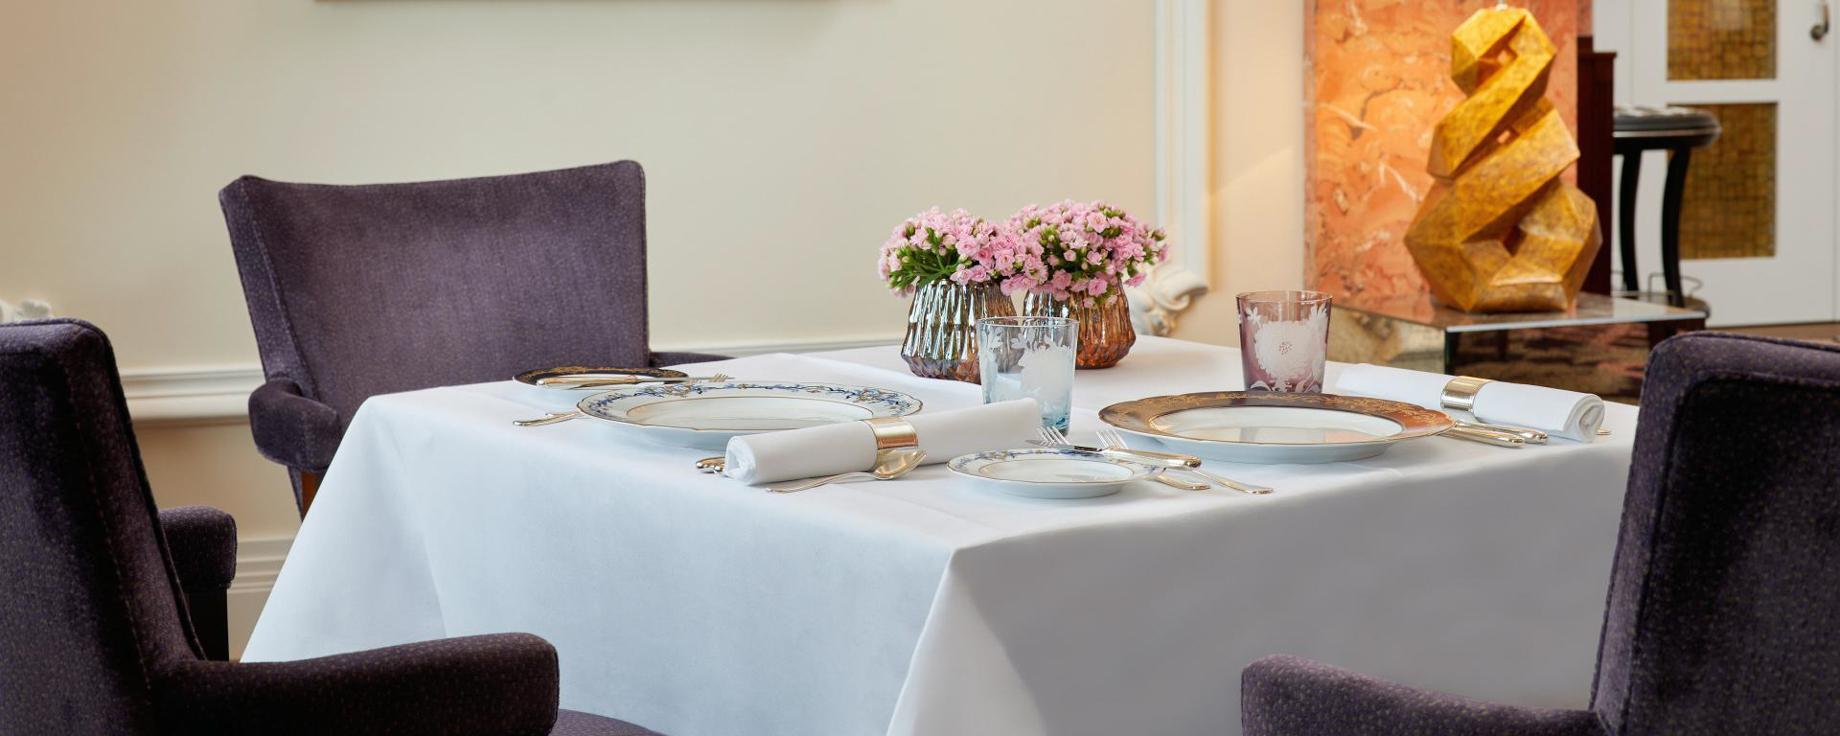 Palace Hotel – Burgenstock Hotels & Resort – Obburgen, Switzerland – Table Setting